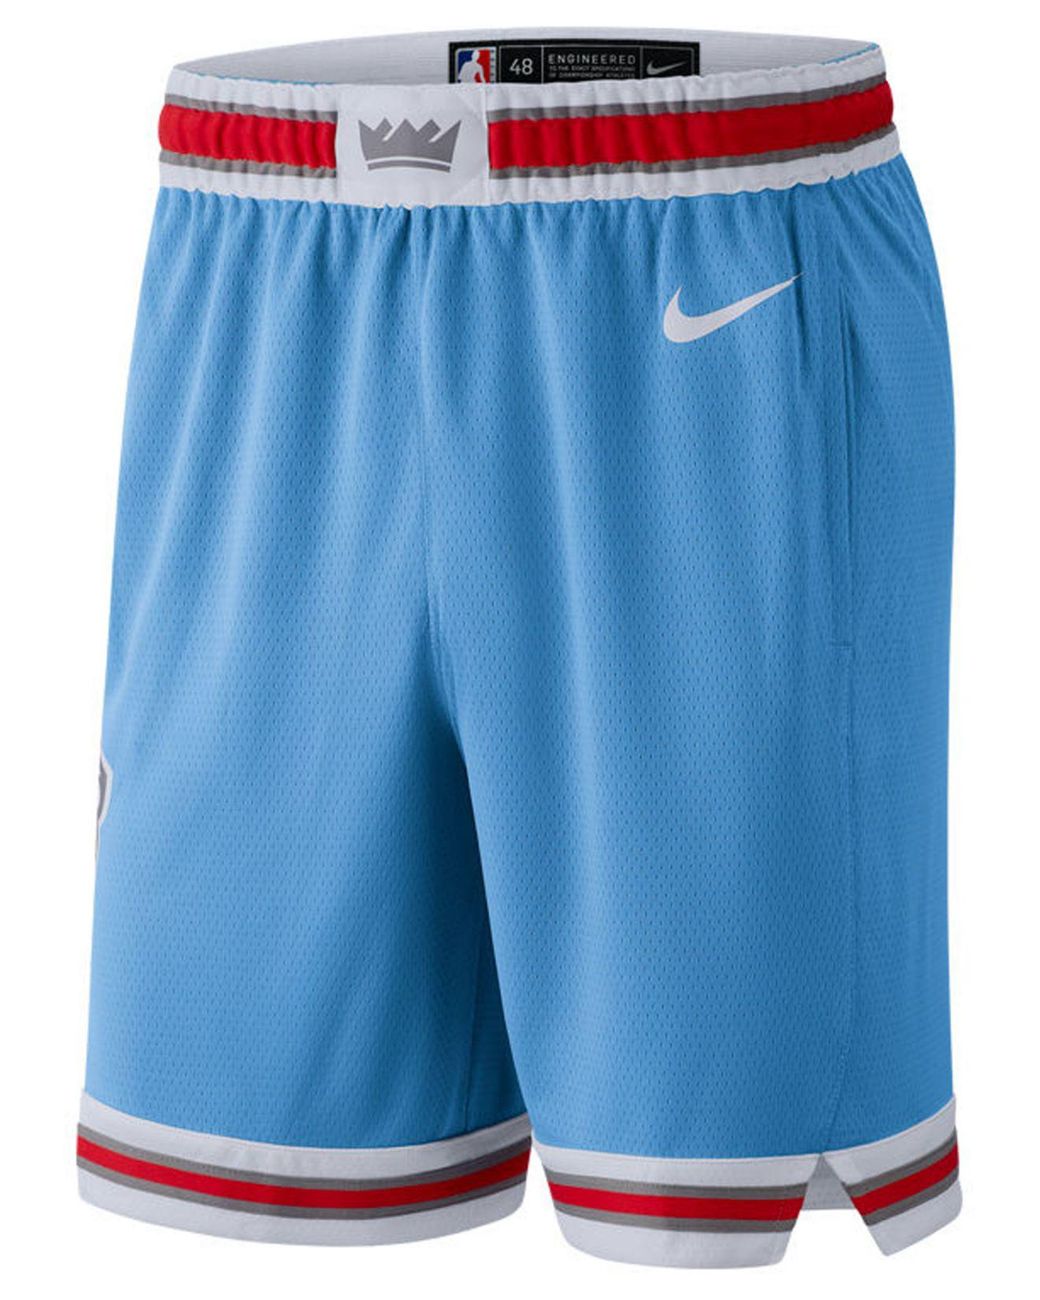 Golden State Warriors City Edition 2020 Men's Nike NBA Swingman Shorts.